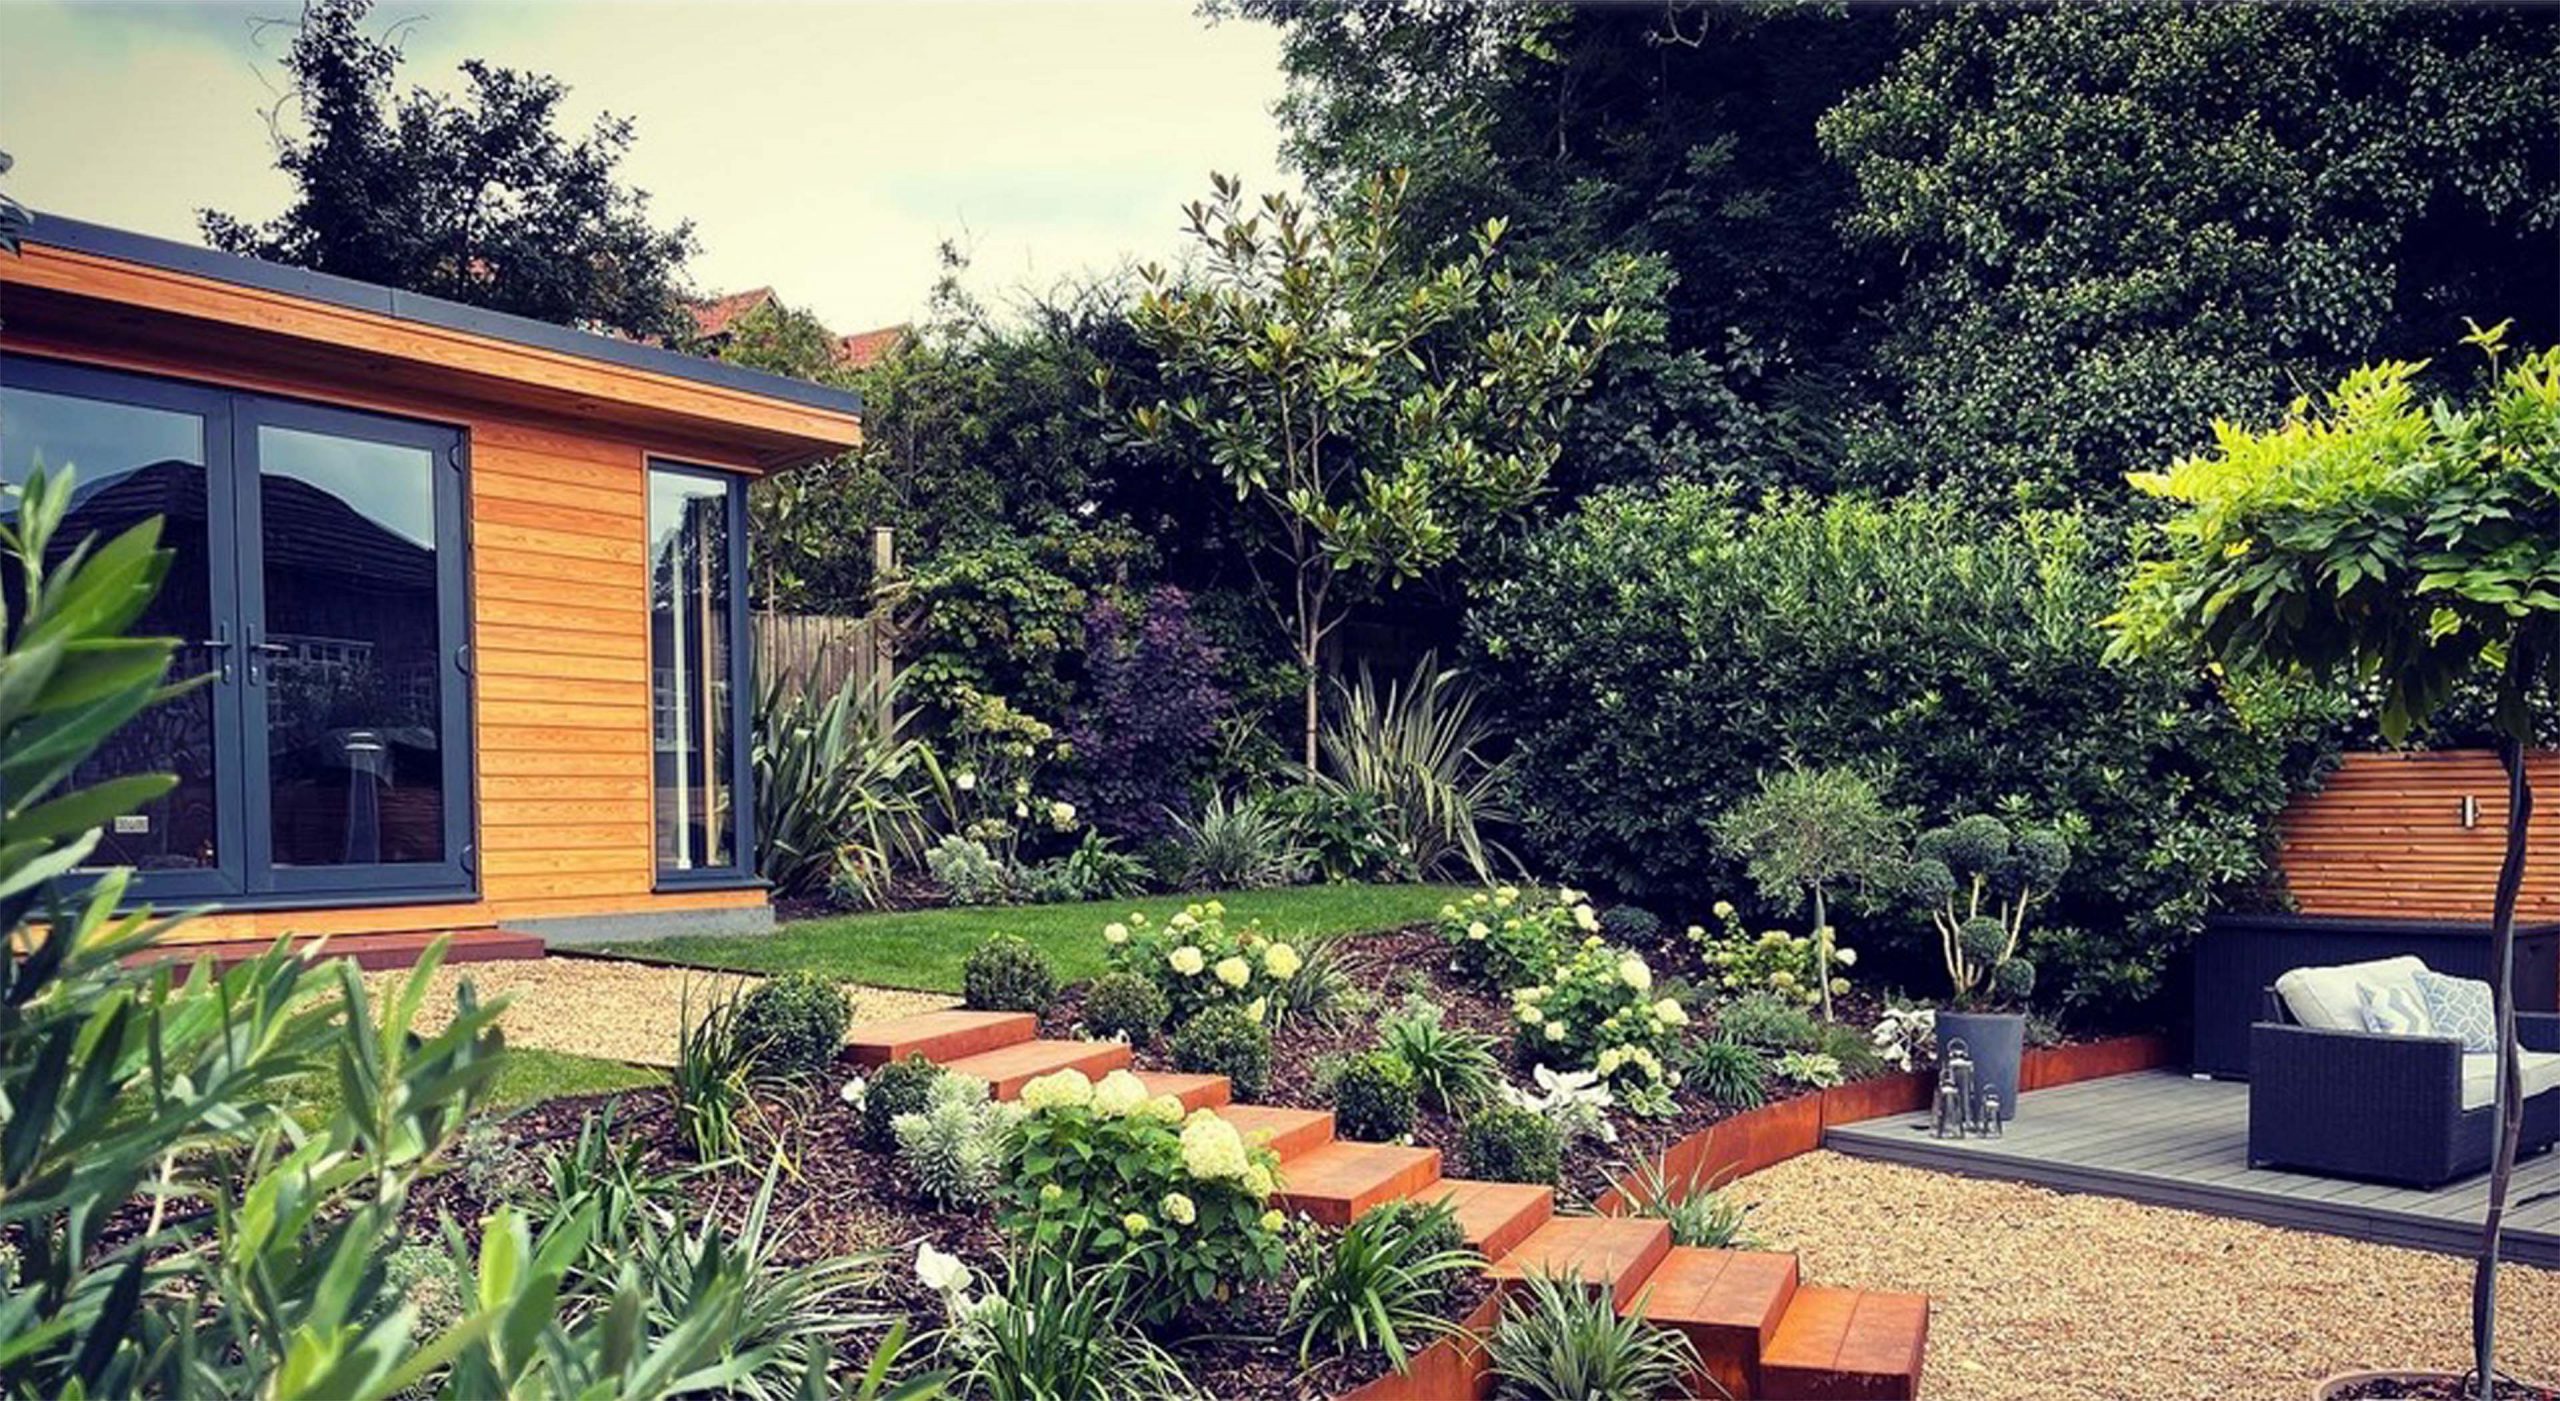 Designer garden with a bespoke garden building